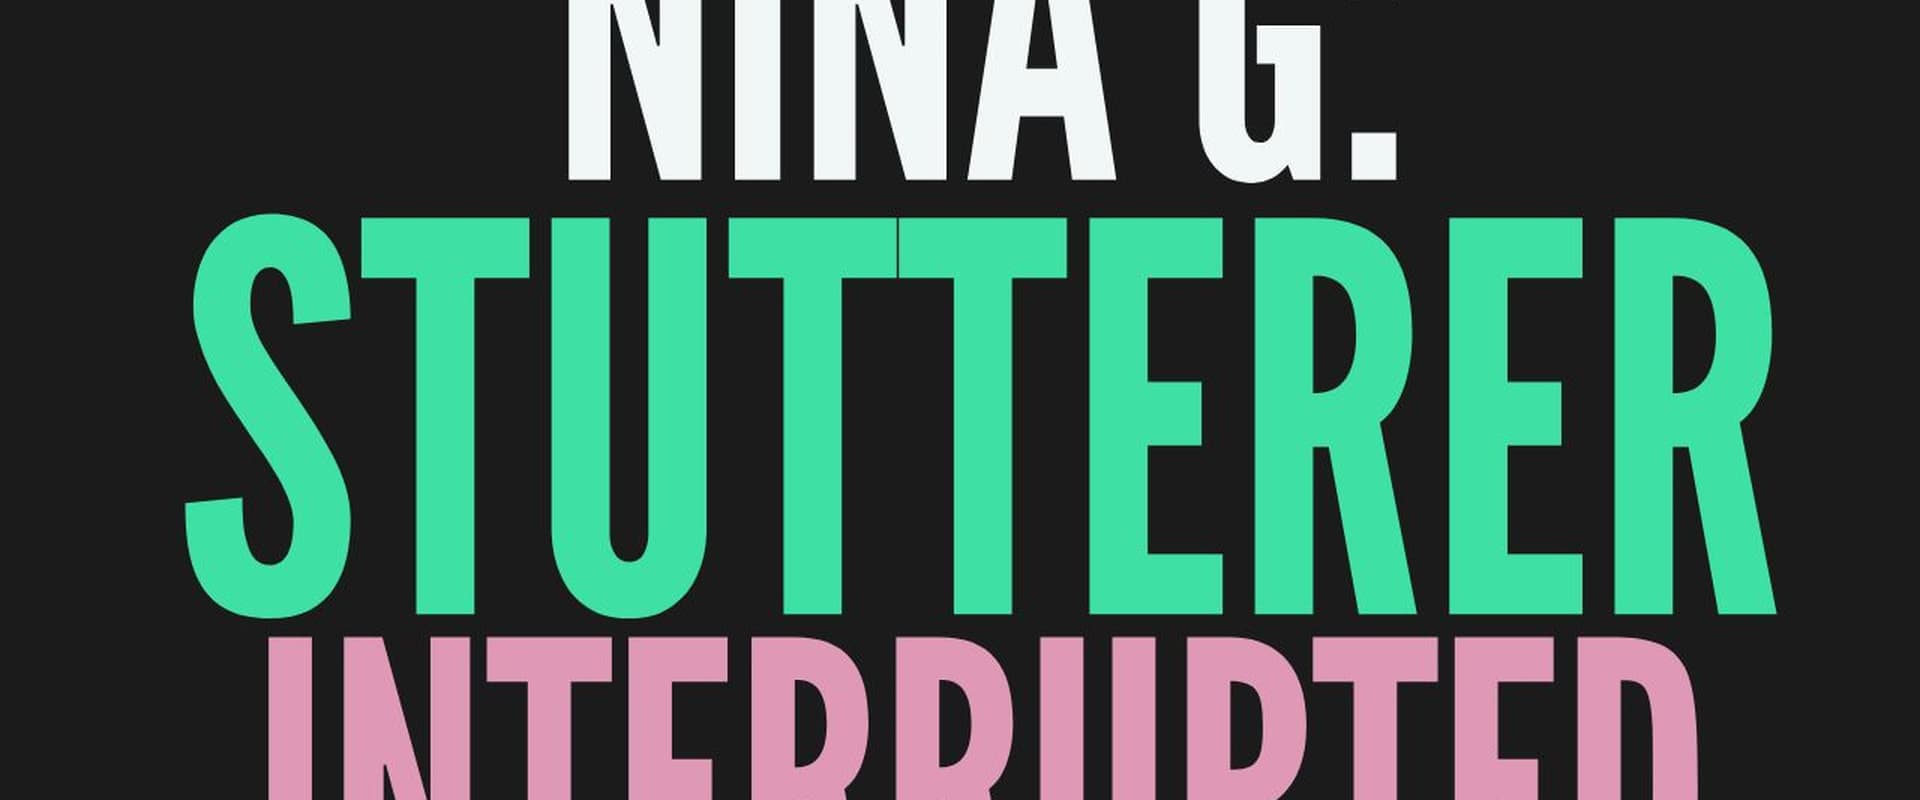 NINA G: STUTTERER INTERRUPTED